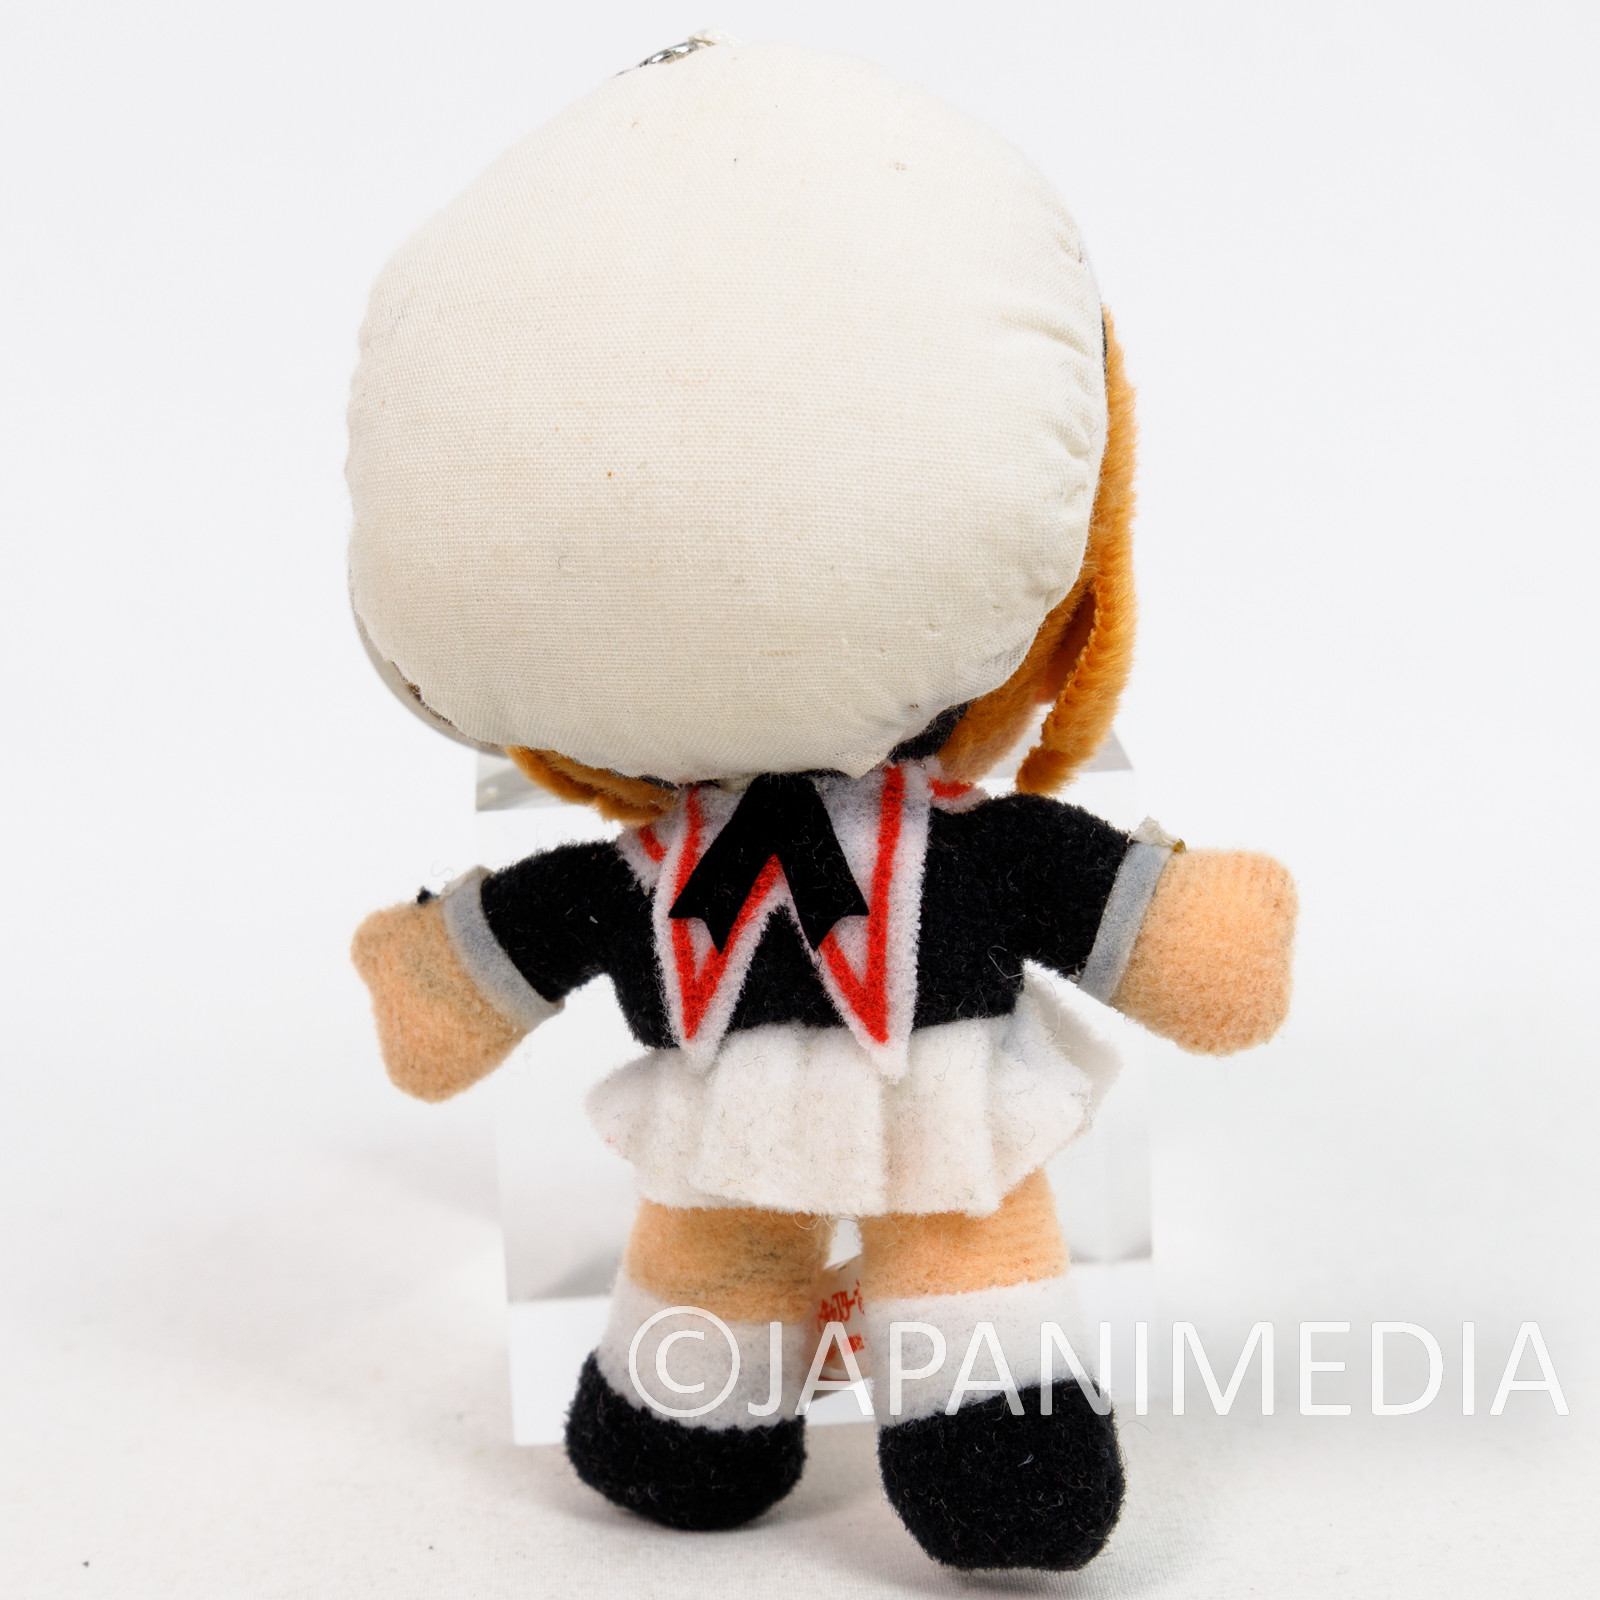 Cardcaptor Sakura Plush Doll Keychain #4 BANPRESTO